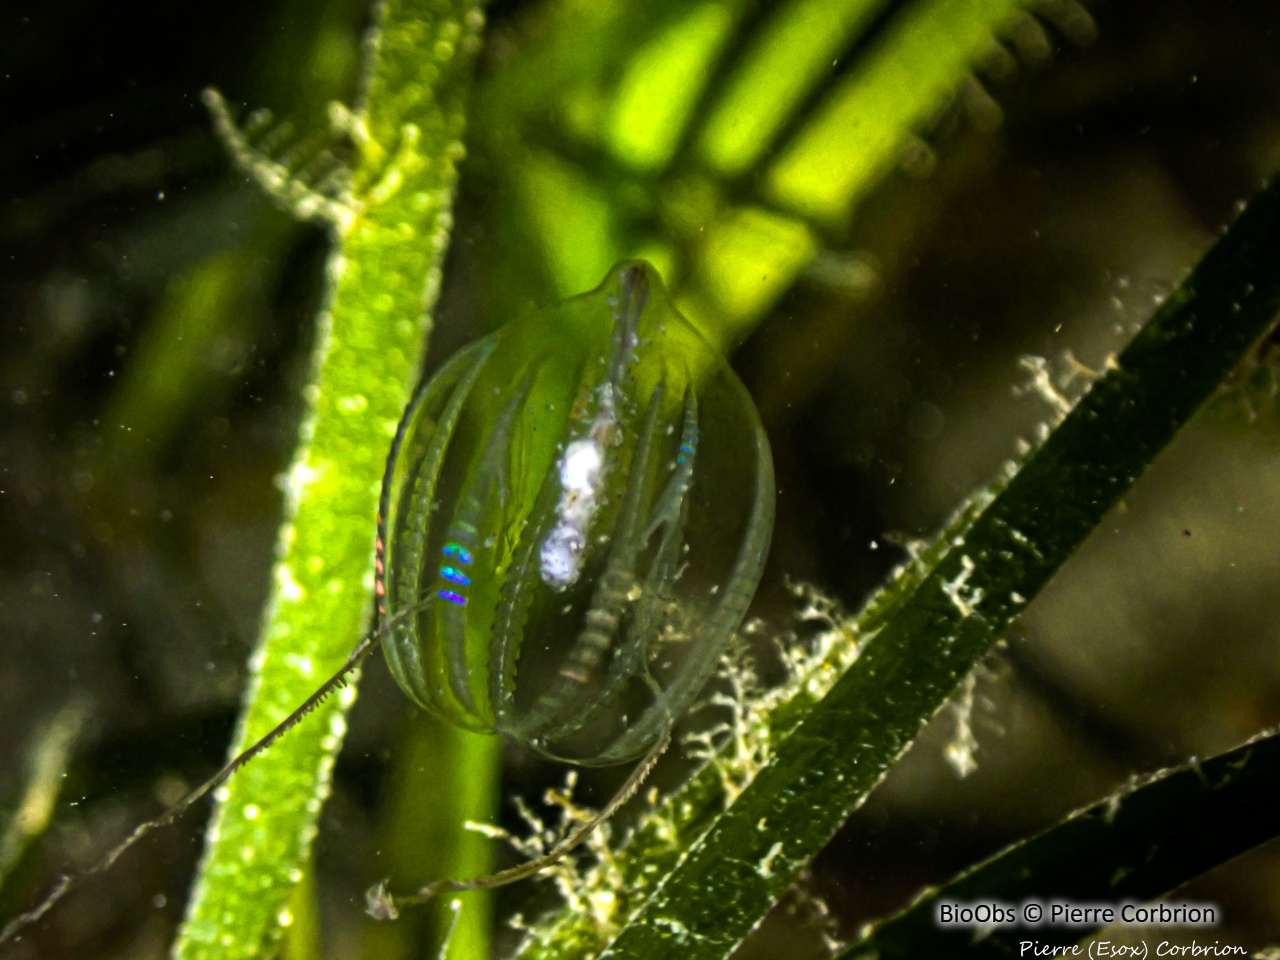 Groseille de mer - Pleurobrachia pileus - Pierre Corbrion - BioObs